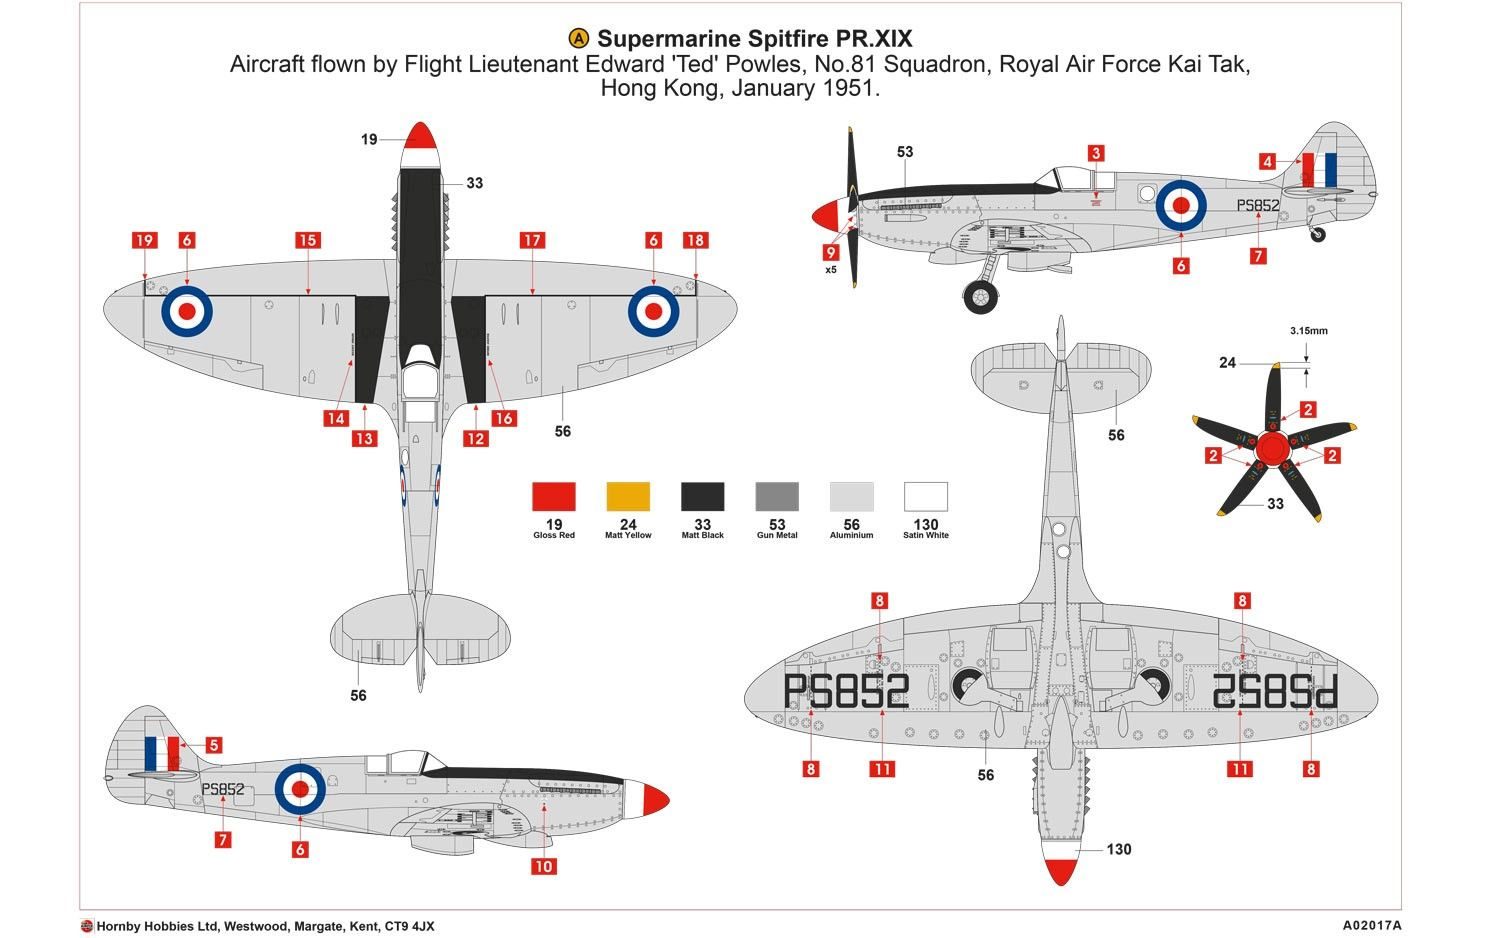 a02017a-spitfire-a-layout